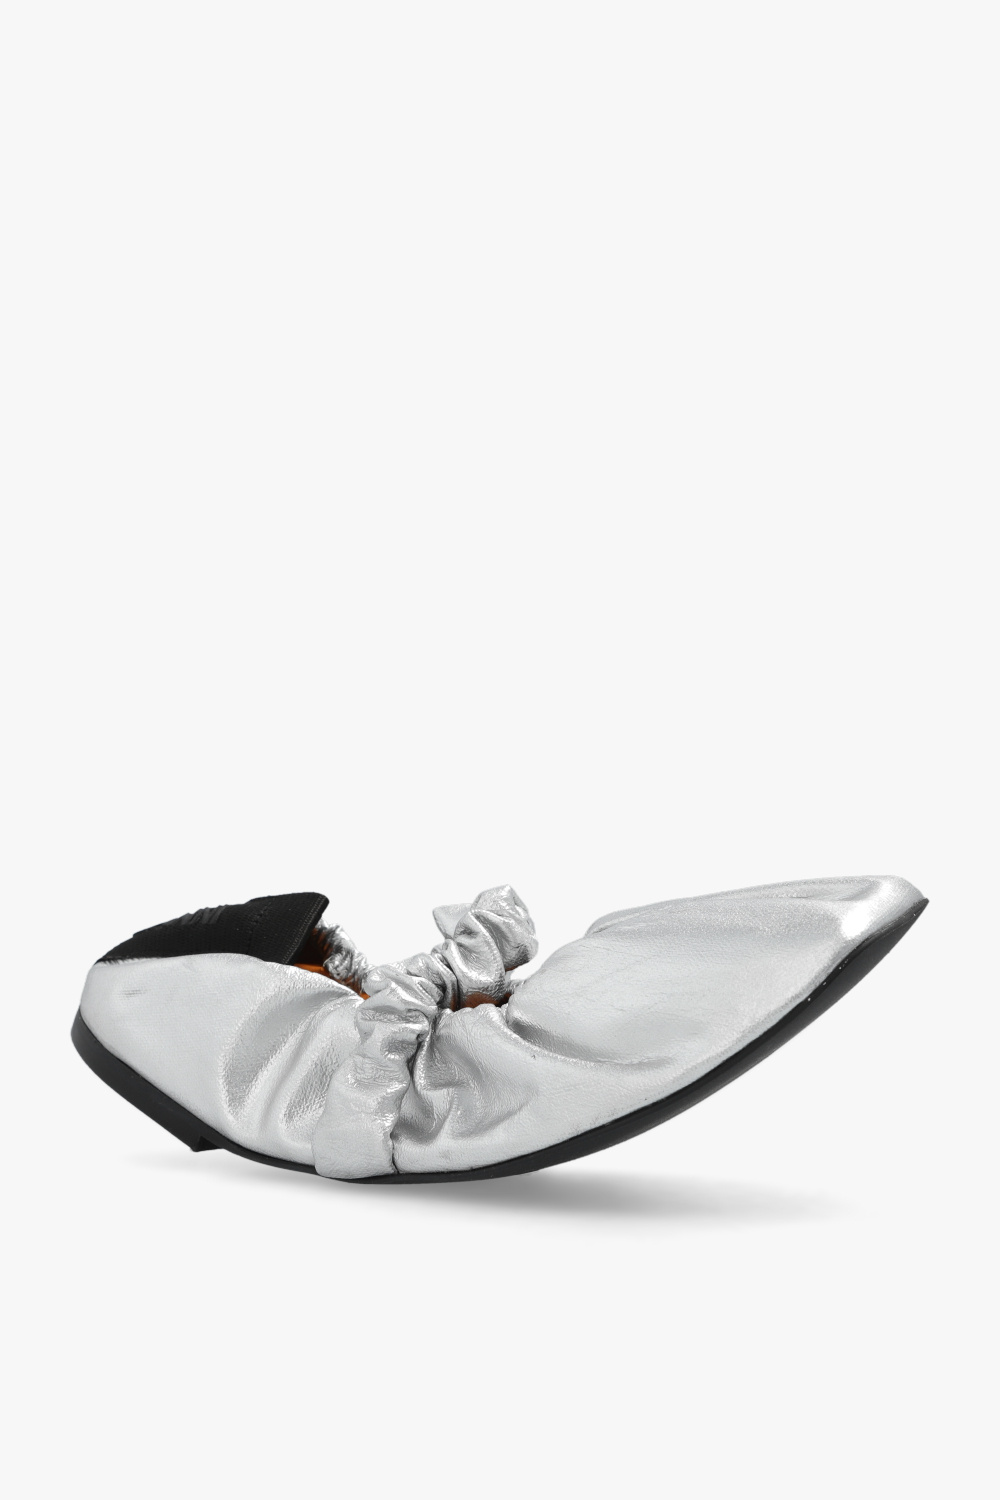 Ganni Elba strapped into a slick set of heeled sandals